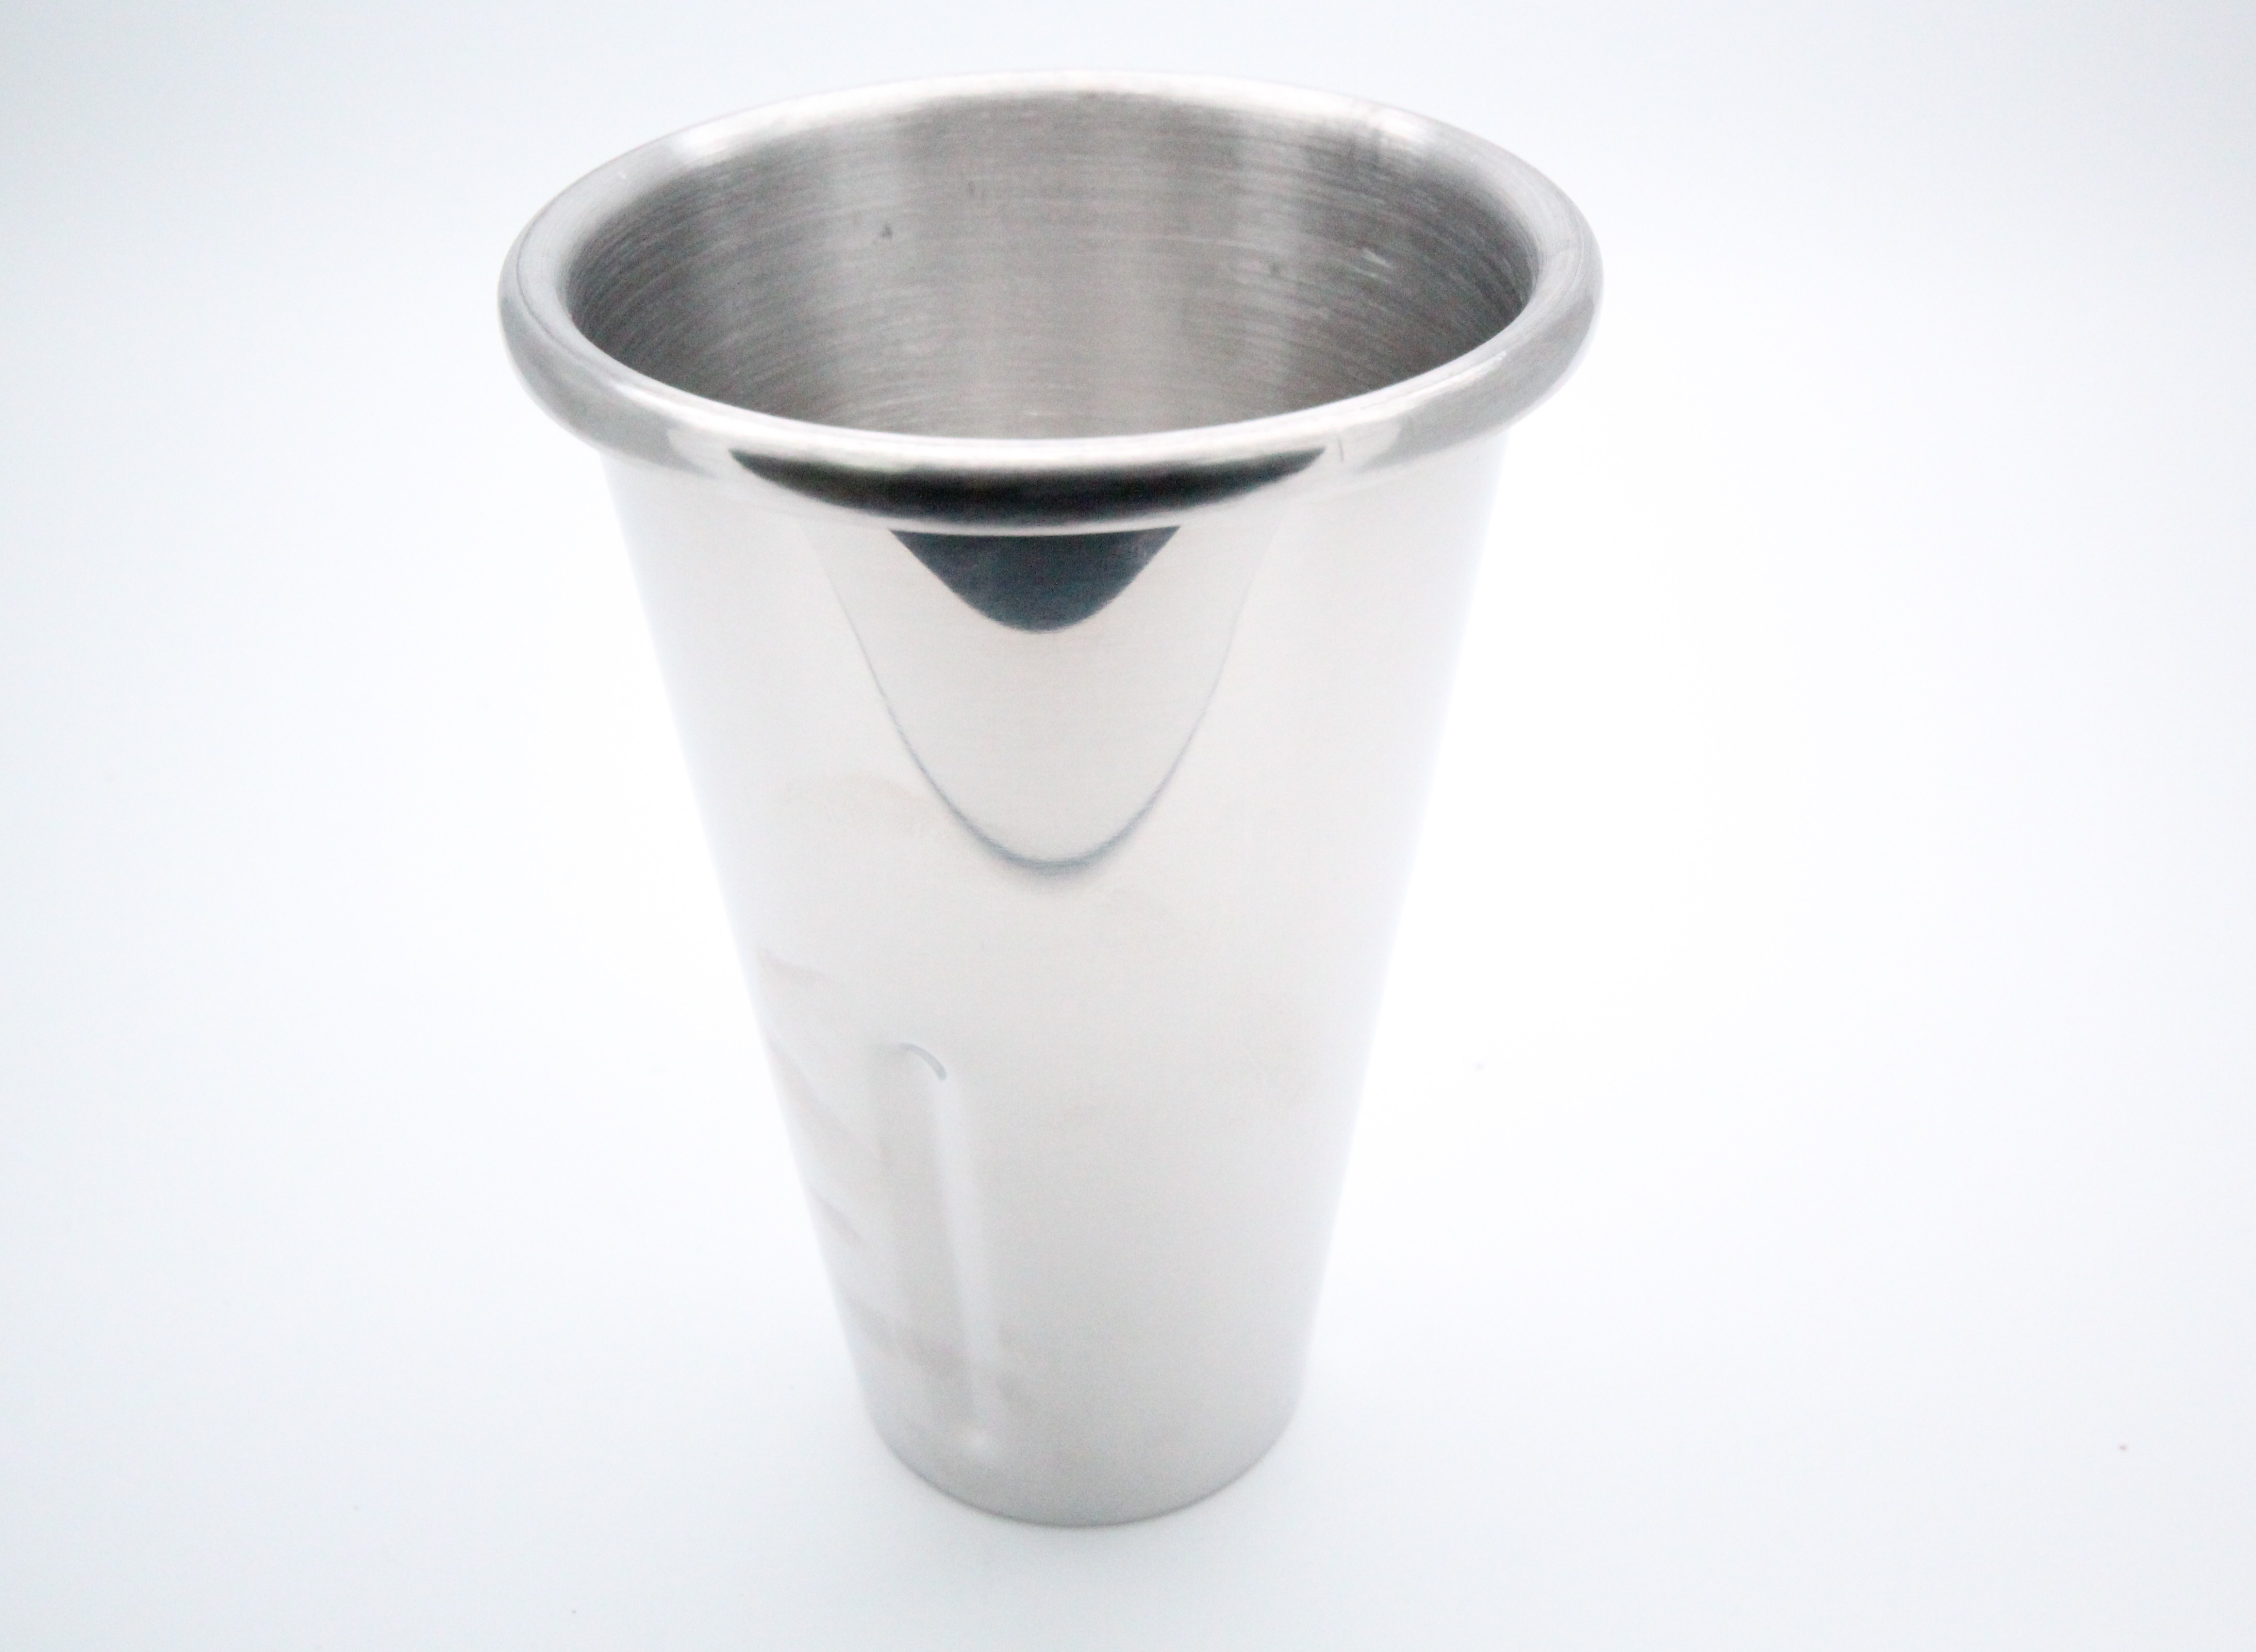 CKP0111 Malt cup for CK0097 Spindle Mixer